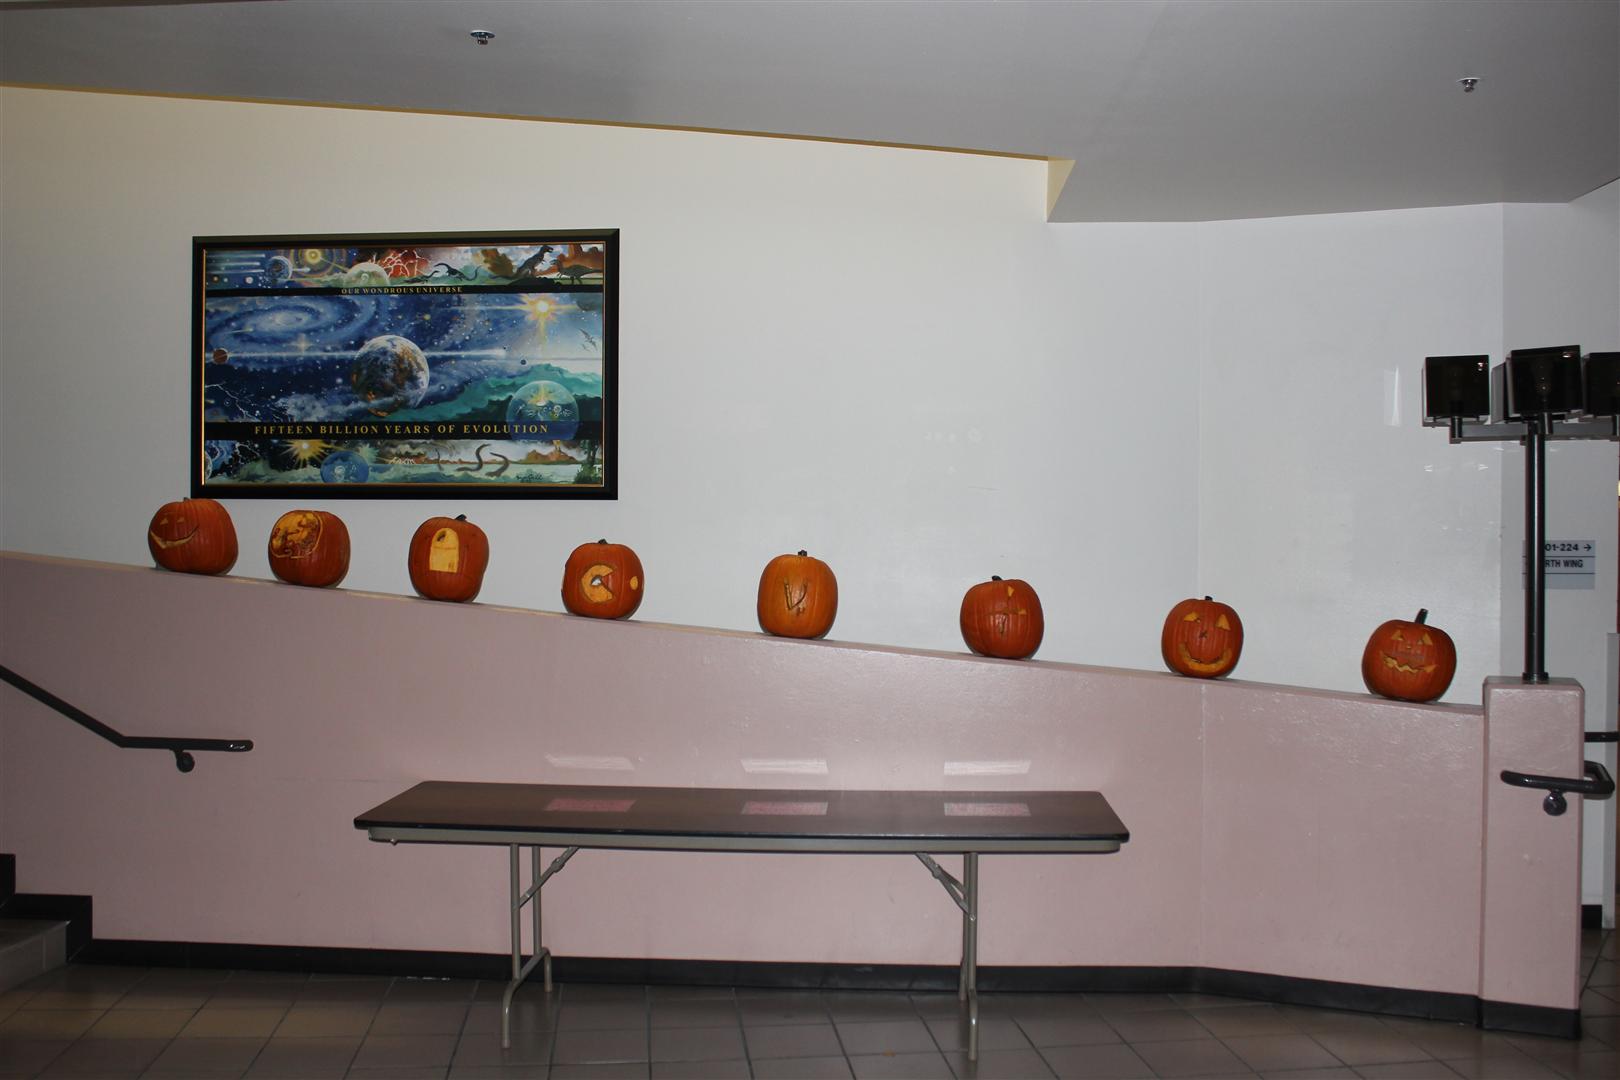 All pumpkins in Steward